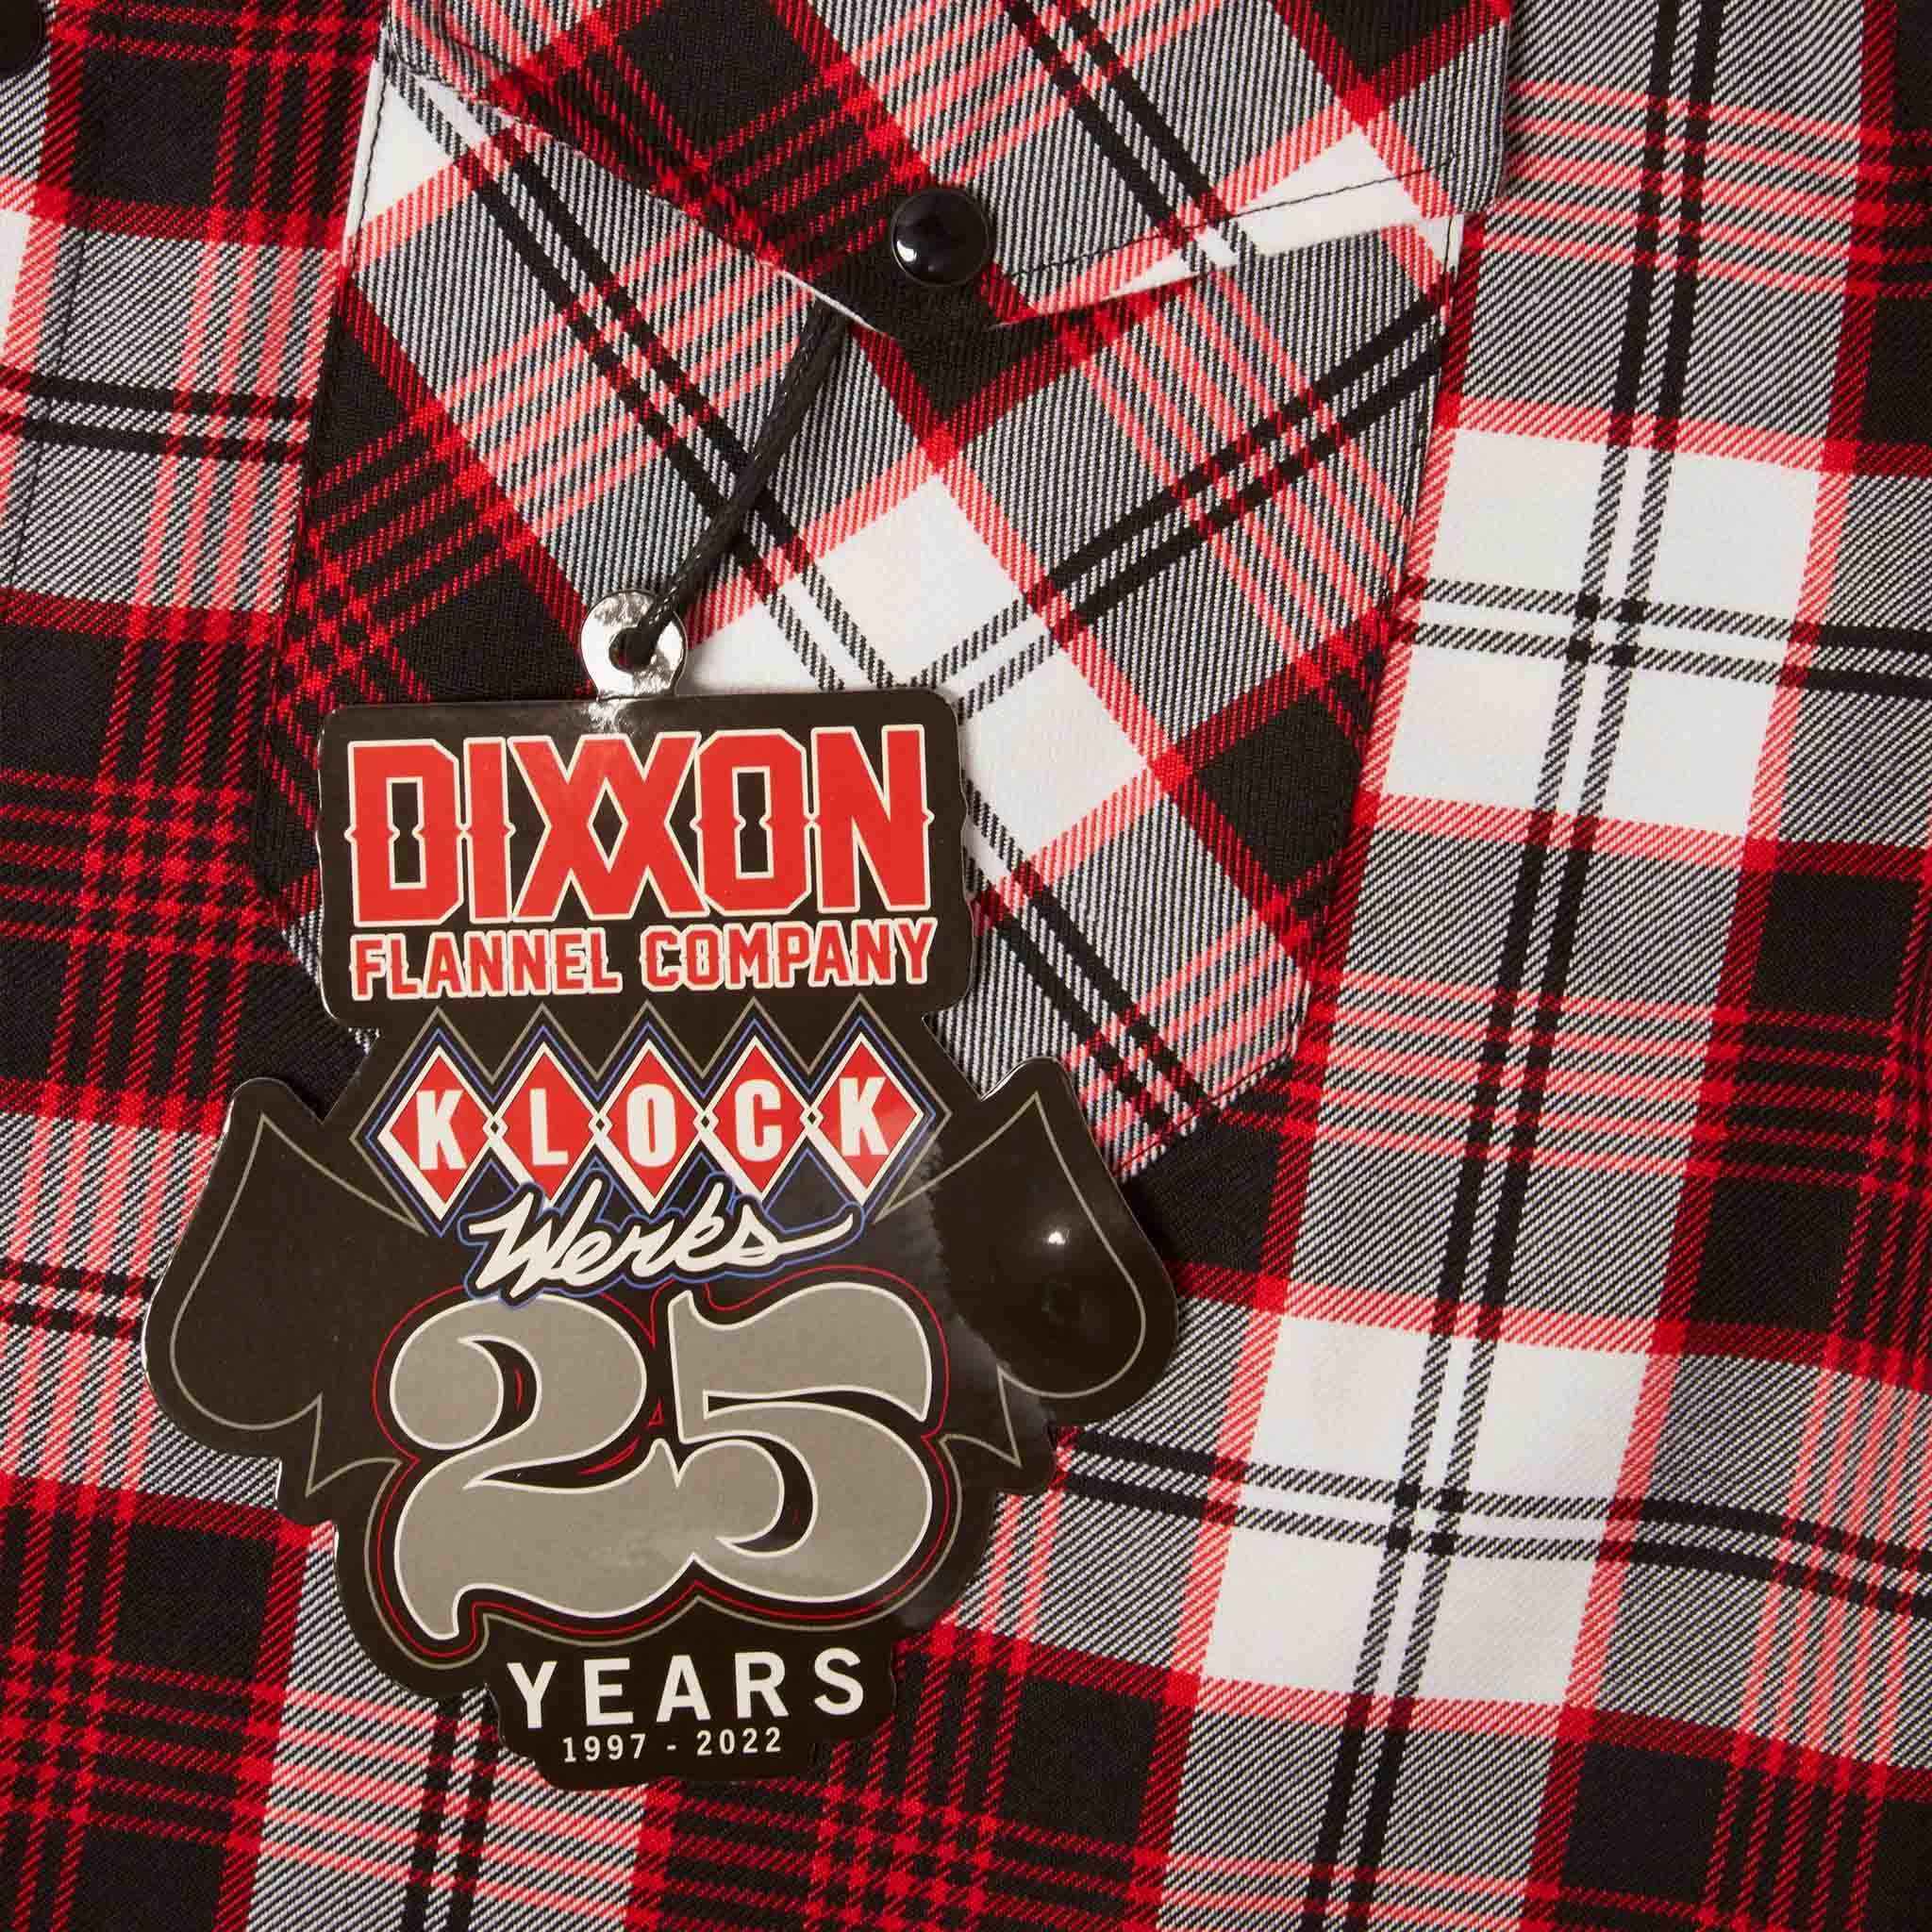 Klock Werks x Dixxon 25th Anniversary Flannel celebrating 25 years!(Celebrating 25 Years!)